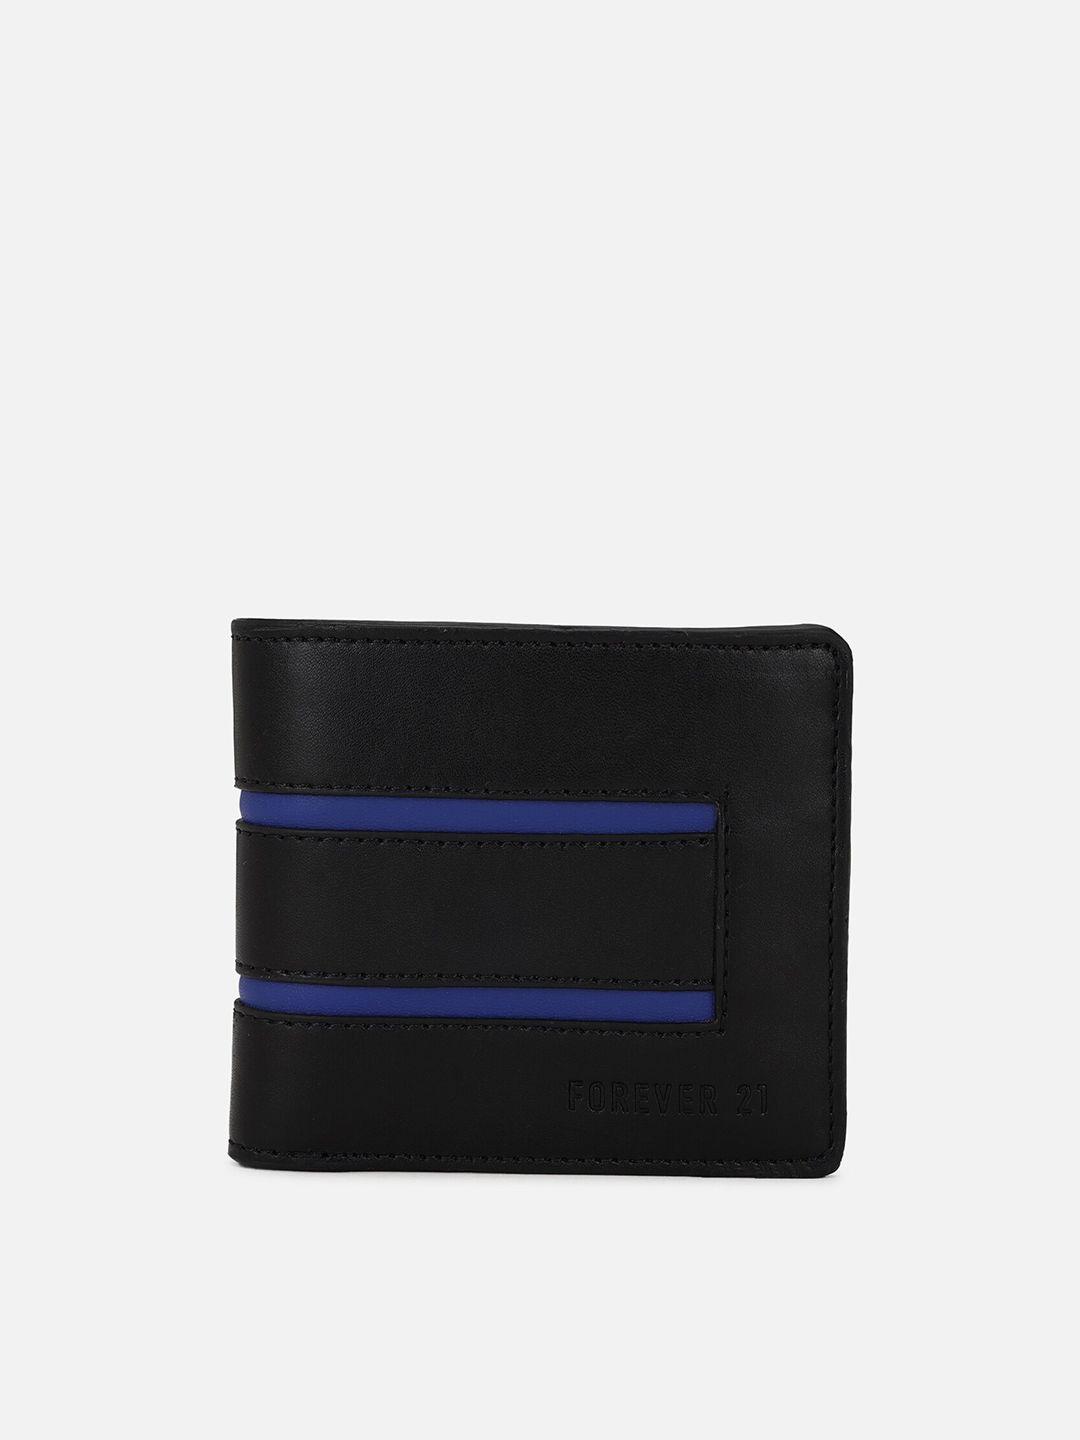 forever 21 men black & blue striped pu two fold wallet